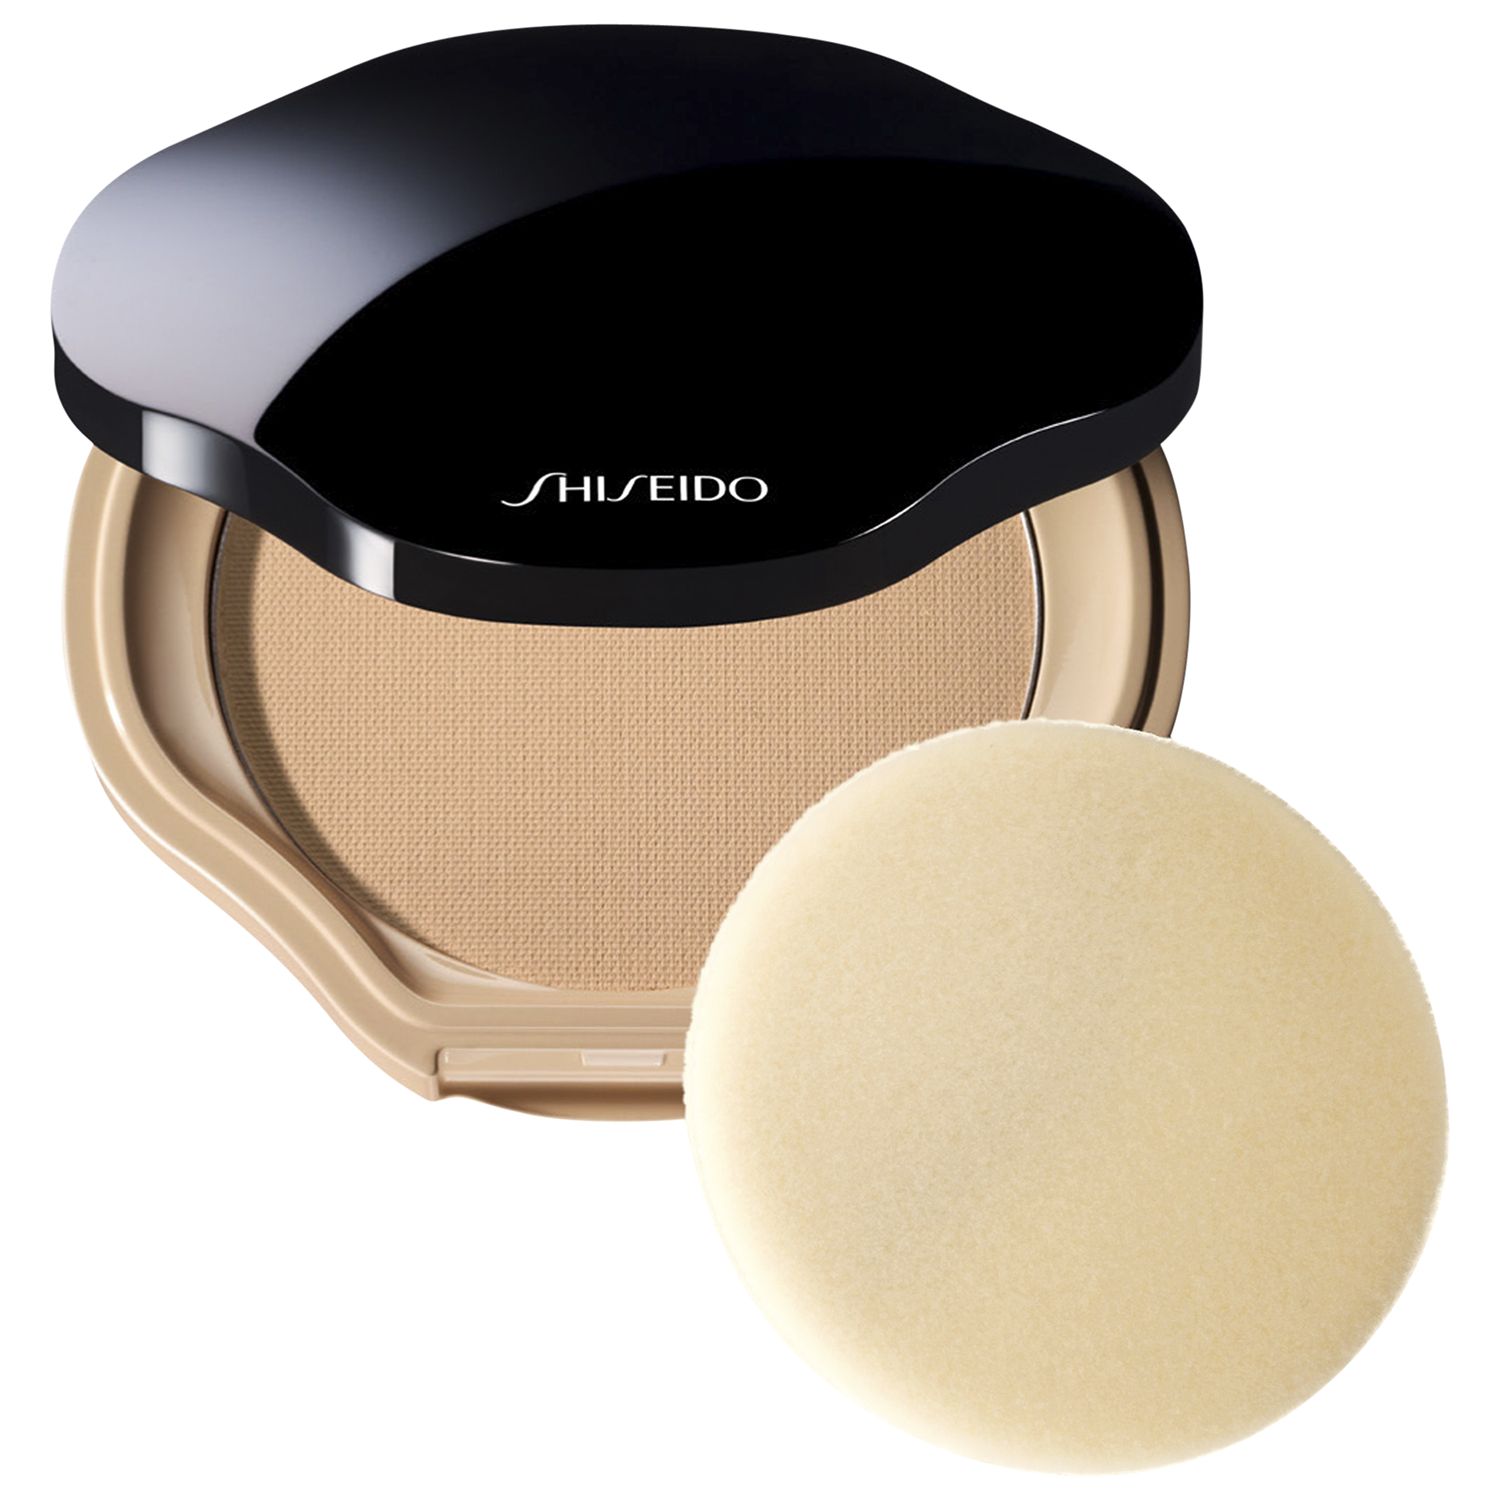 Shiseido Sheer and Perfect Compact Foundation